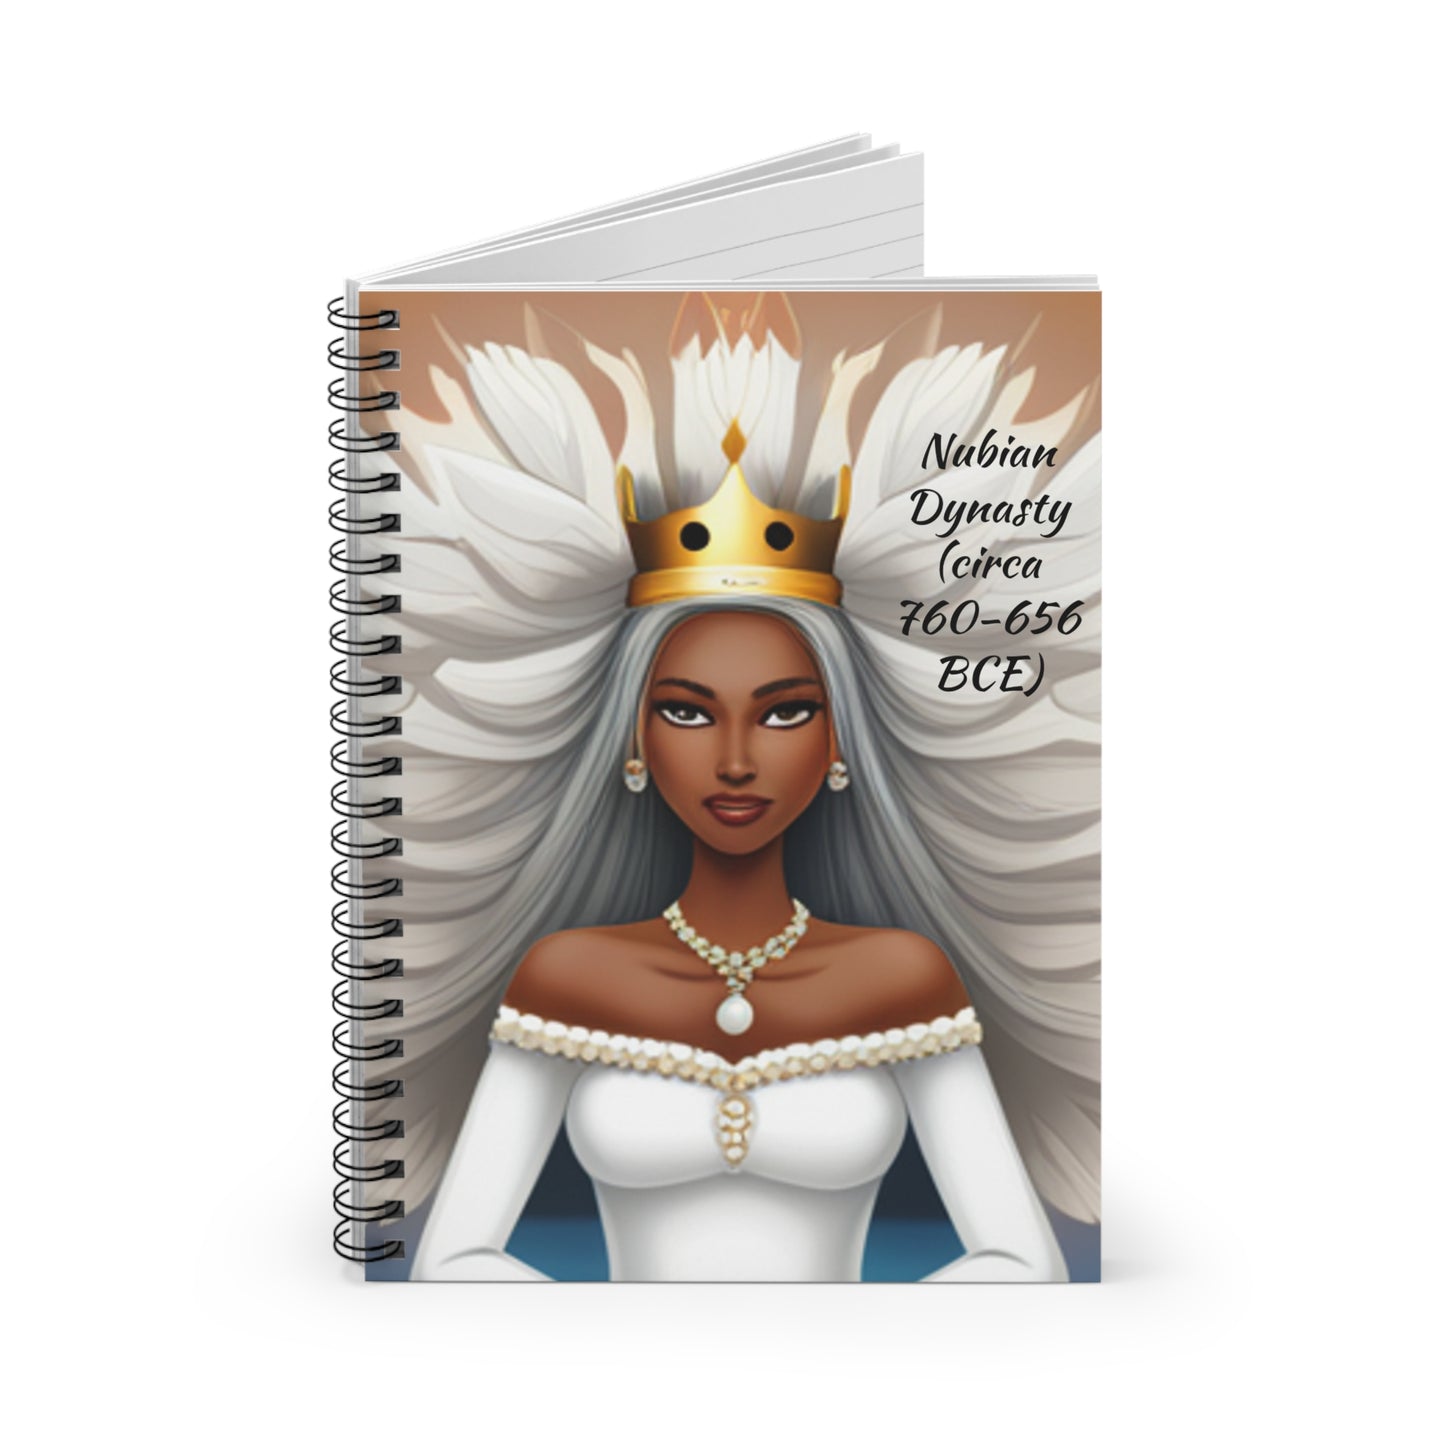 Represent Nubian Princess -Spiral Notebook - Ruled Line